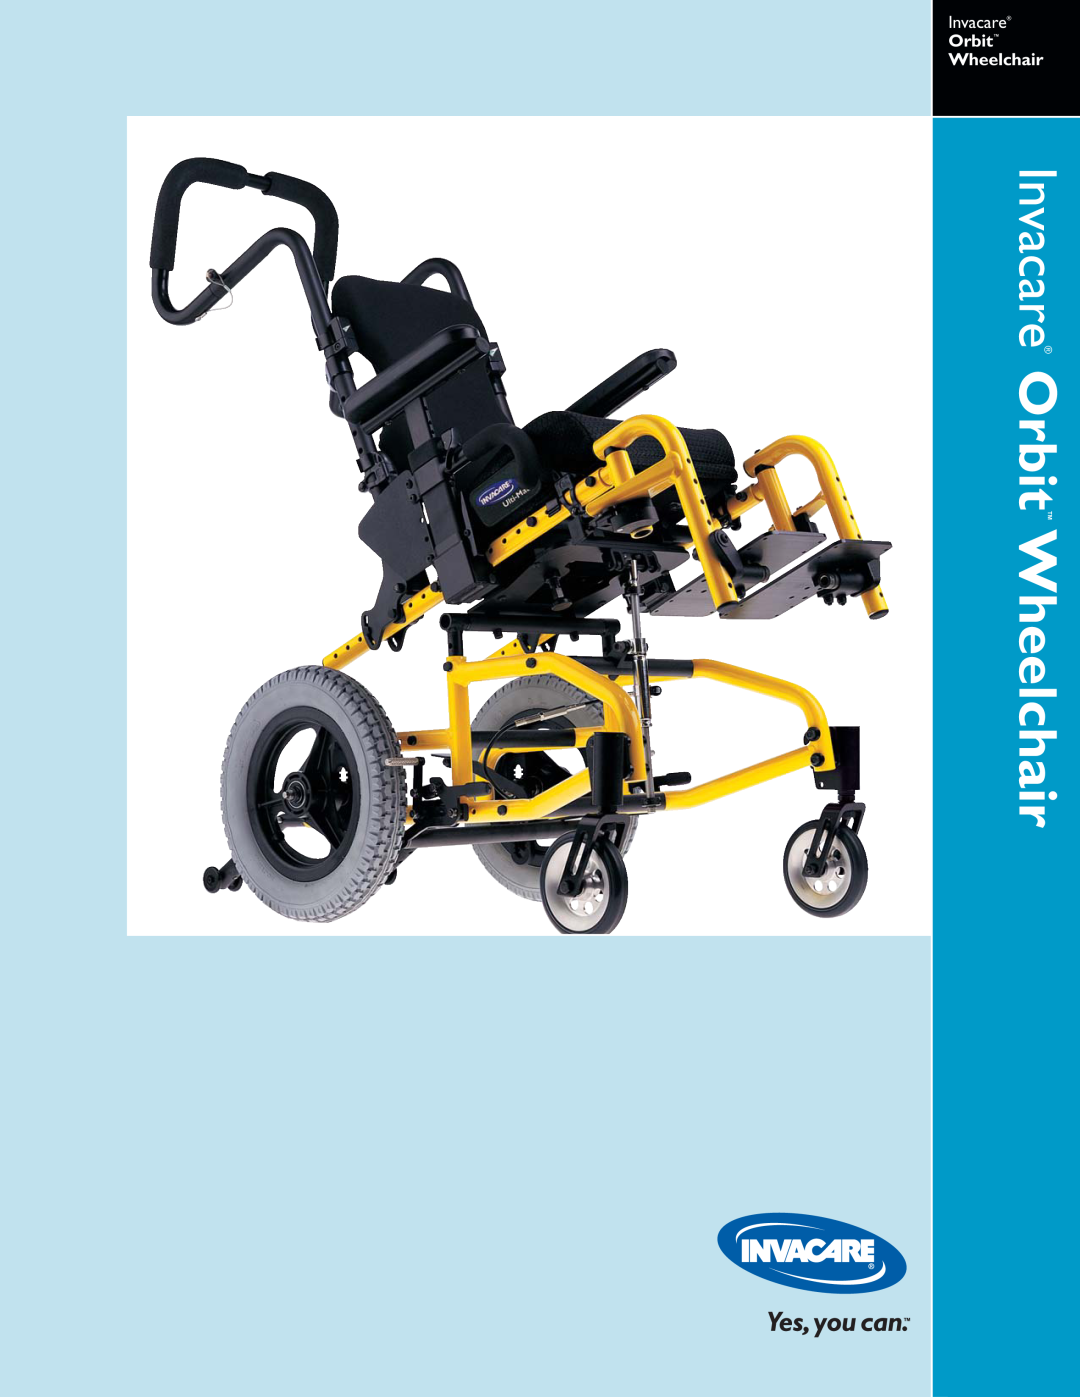 Invacare 01-199 manual Invacare Orbit Wheelchair 